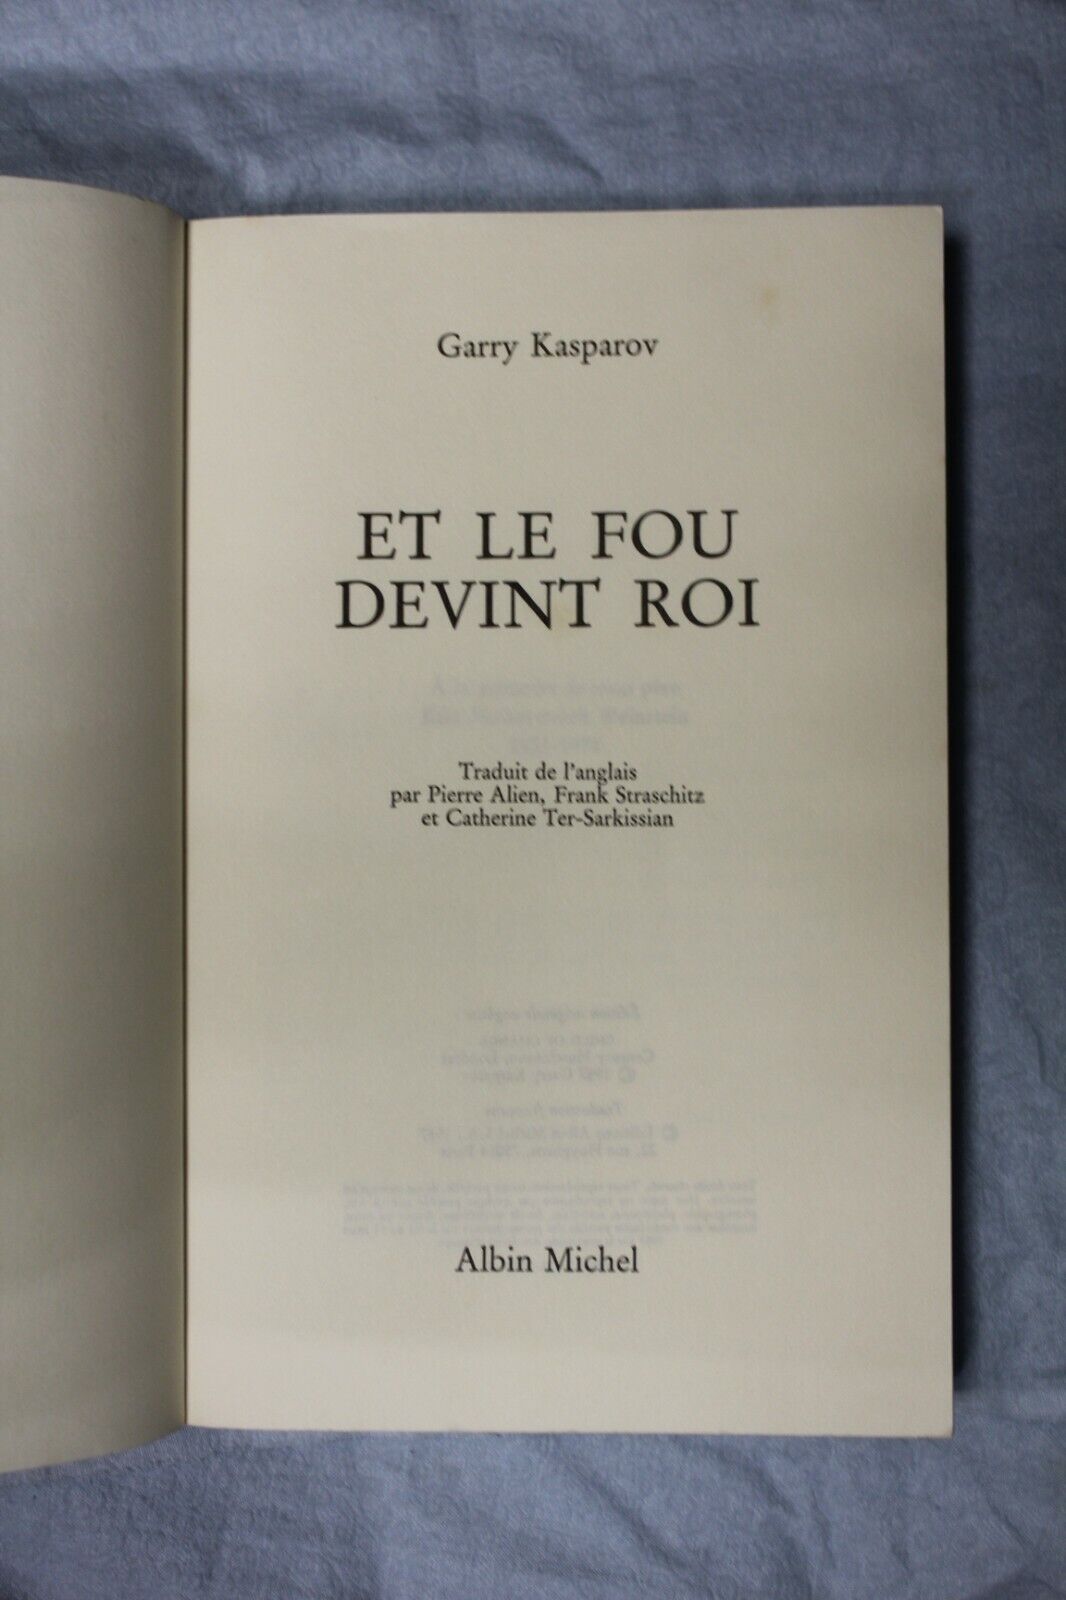 11071.Chess Book: Garry Kasparov, Et le Fou devint Roi w photos, 1987